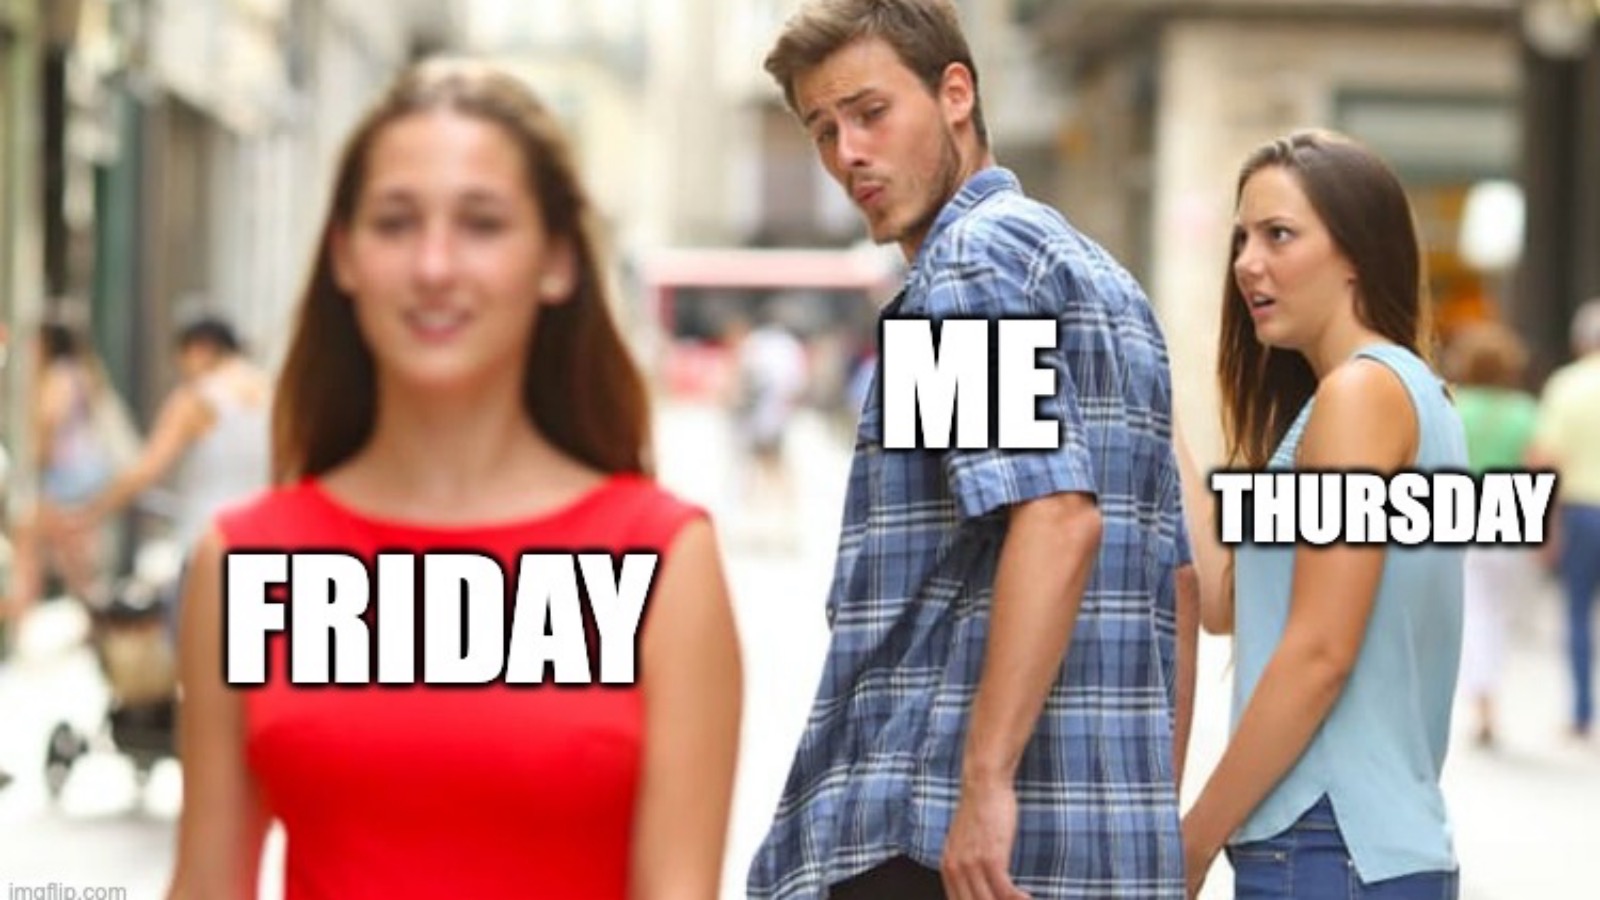 funny meme about Friday vs Thursday